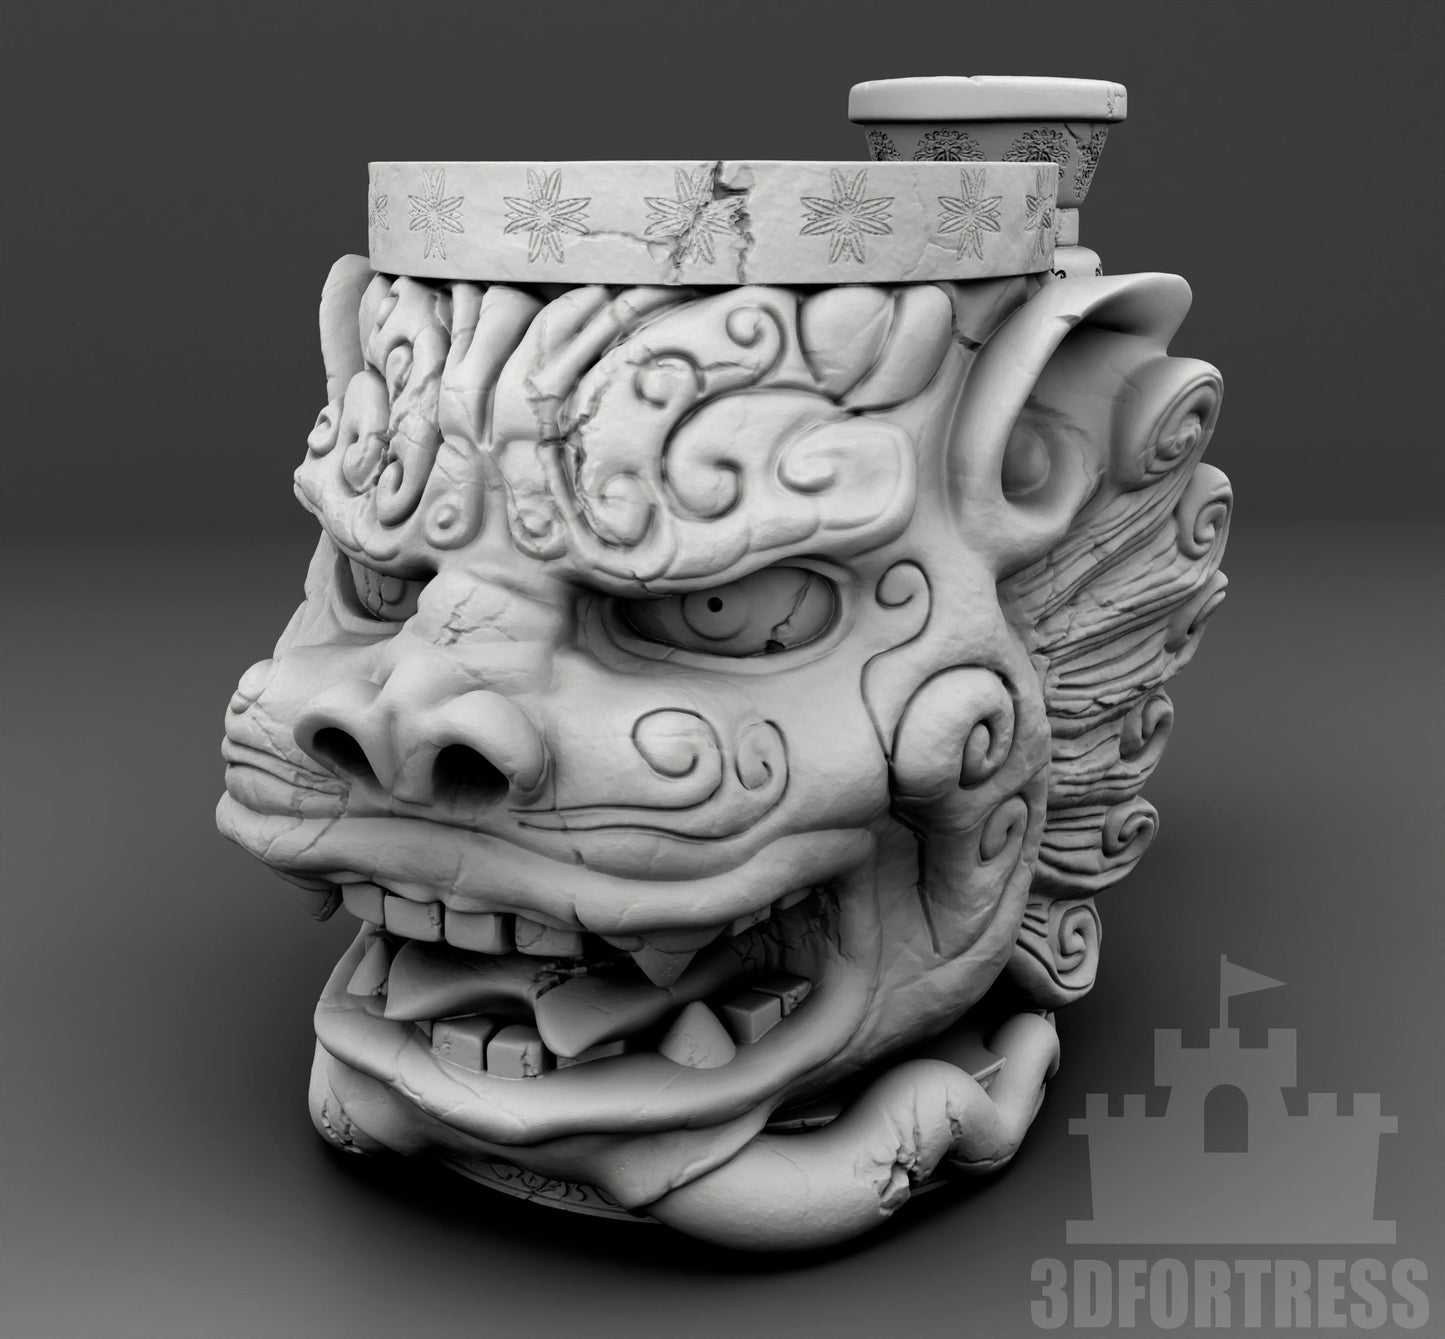 Chinese Dragon Dice Mug by 3DFortress